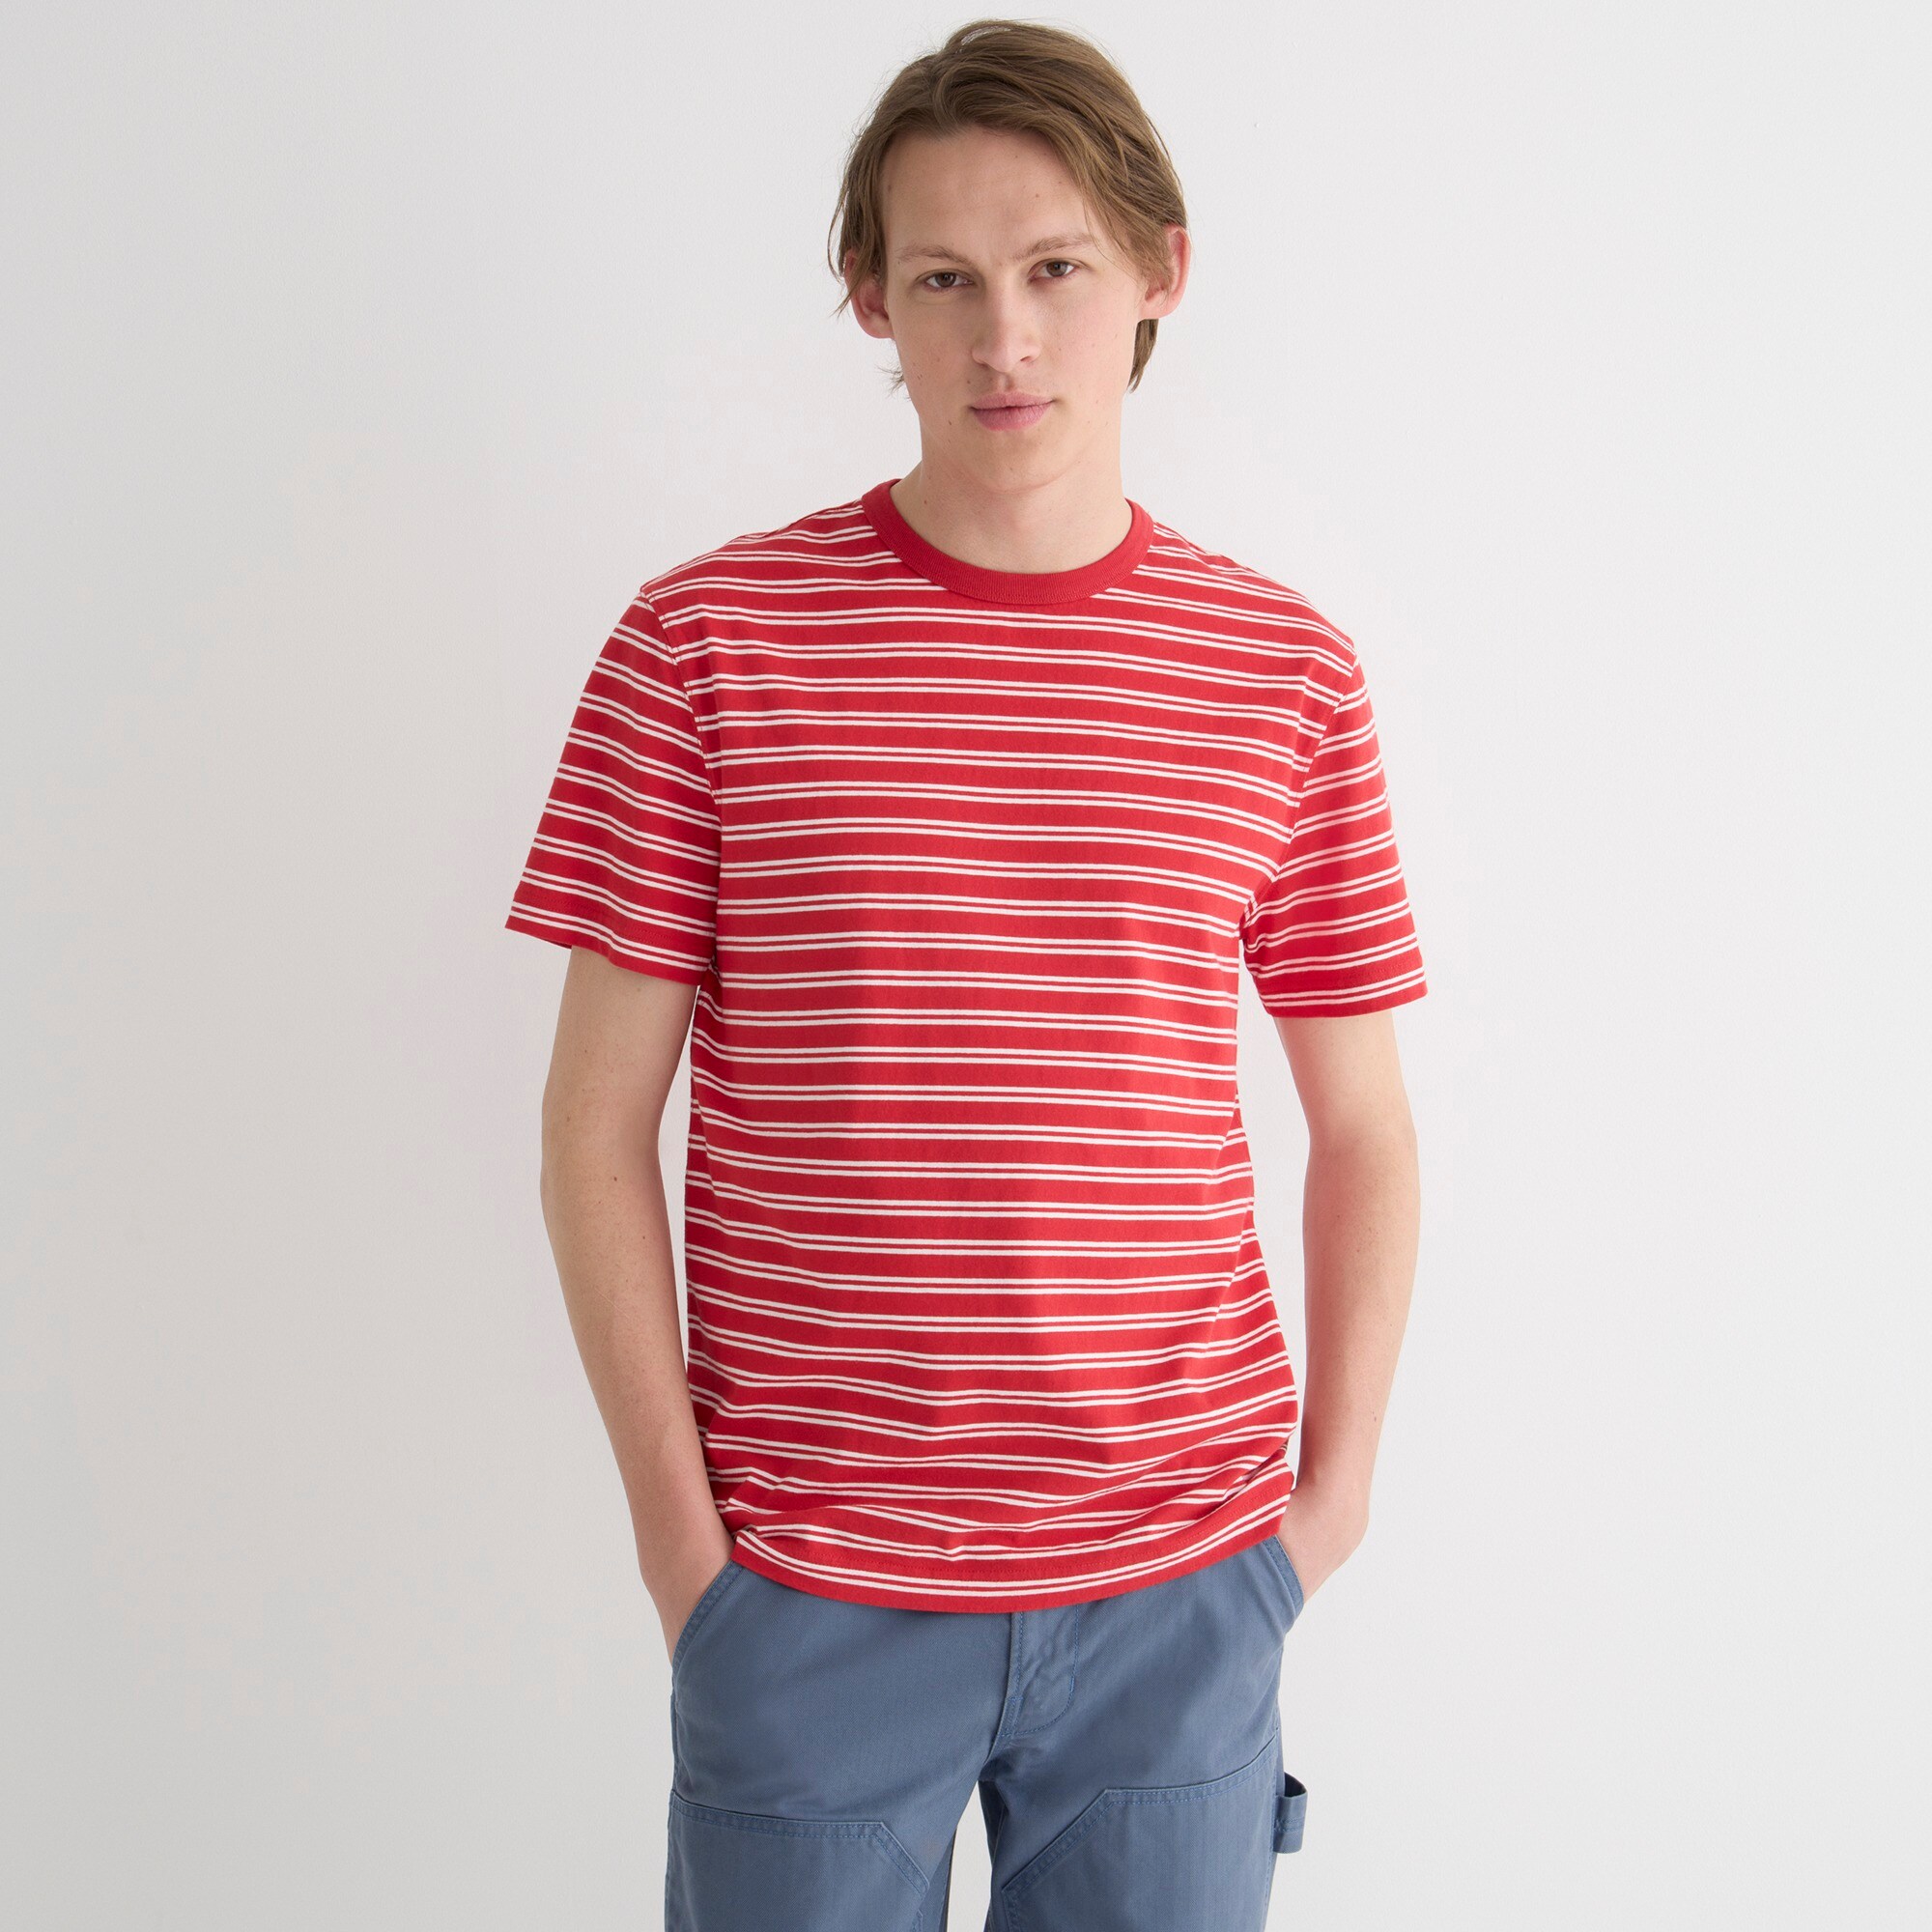 Vidner pin utilfredsstillende J.Crew: Wallace & Barnes Striped T-shirt For Men